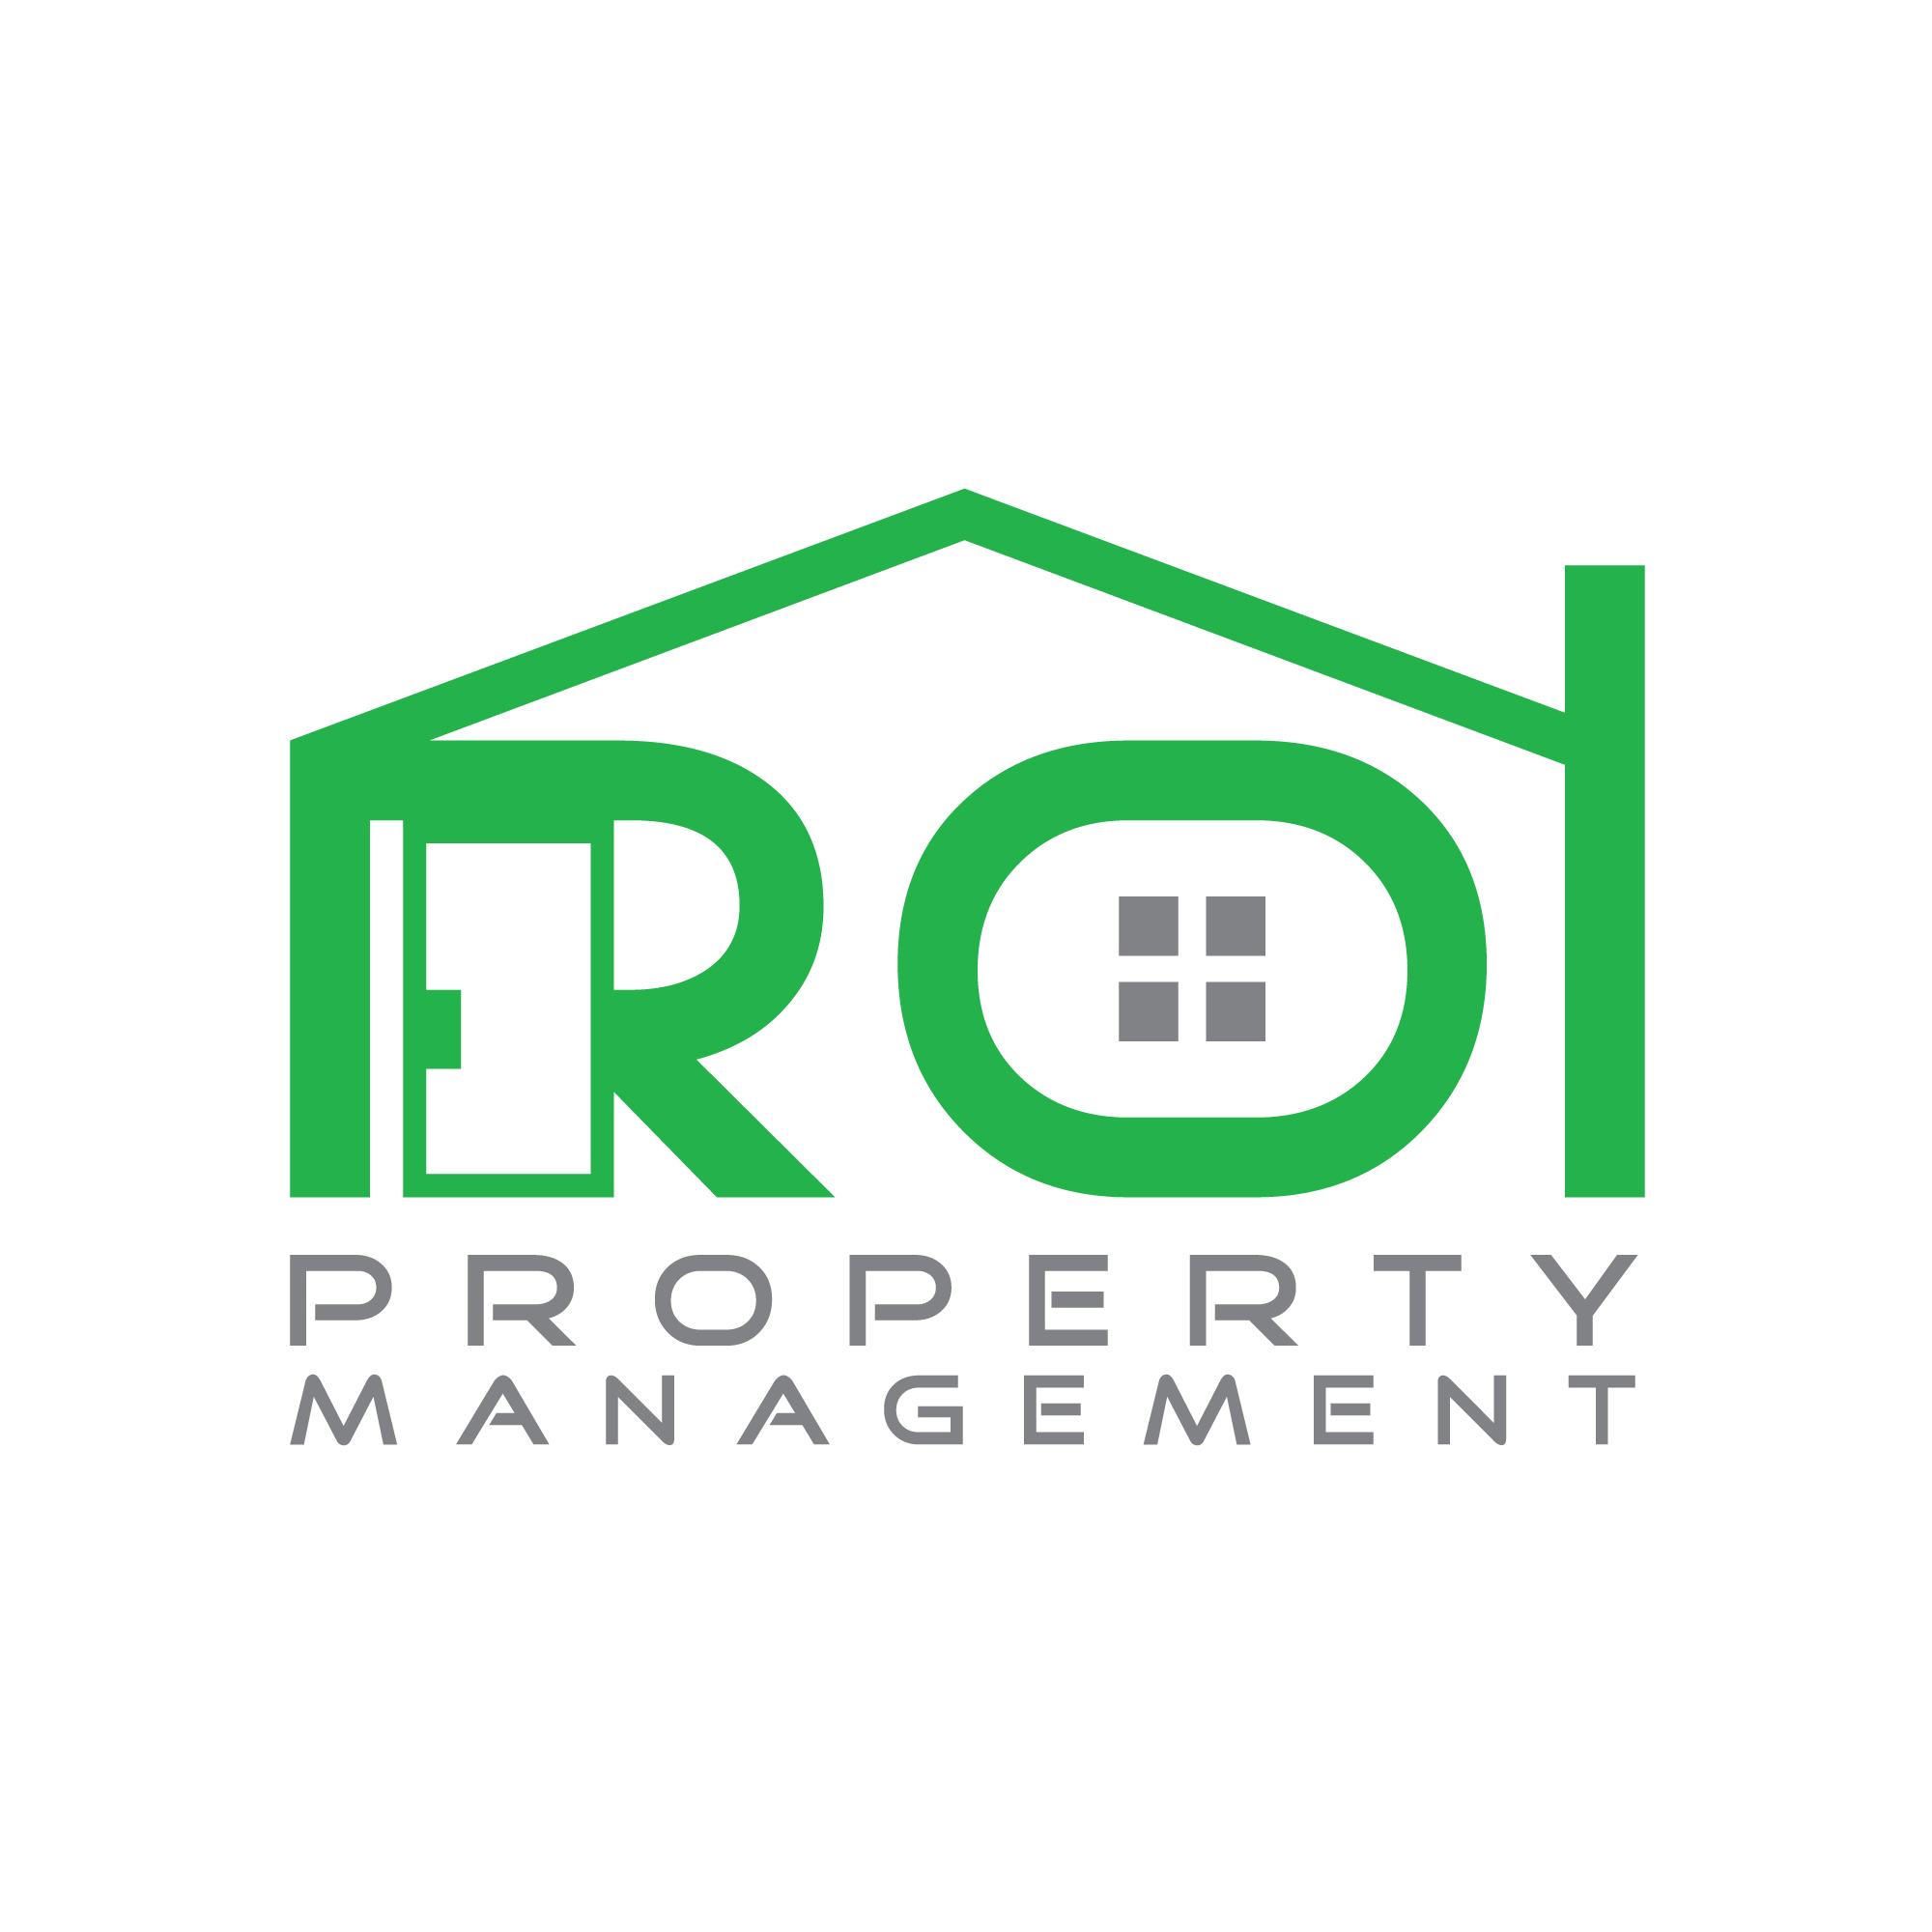 ROI Property Management